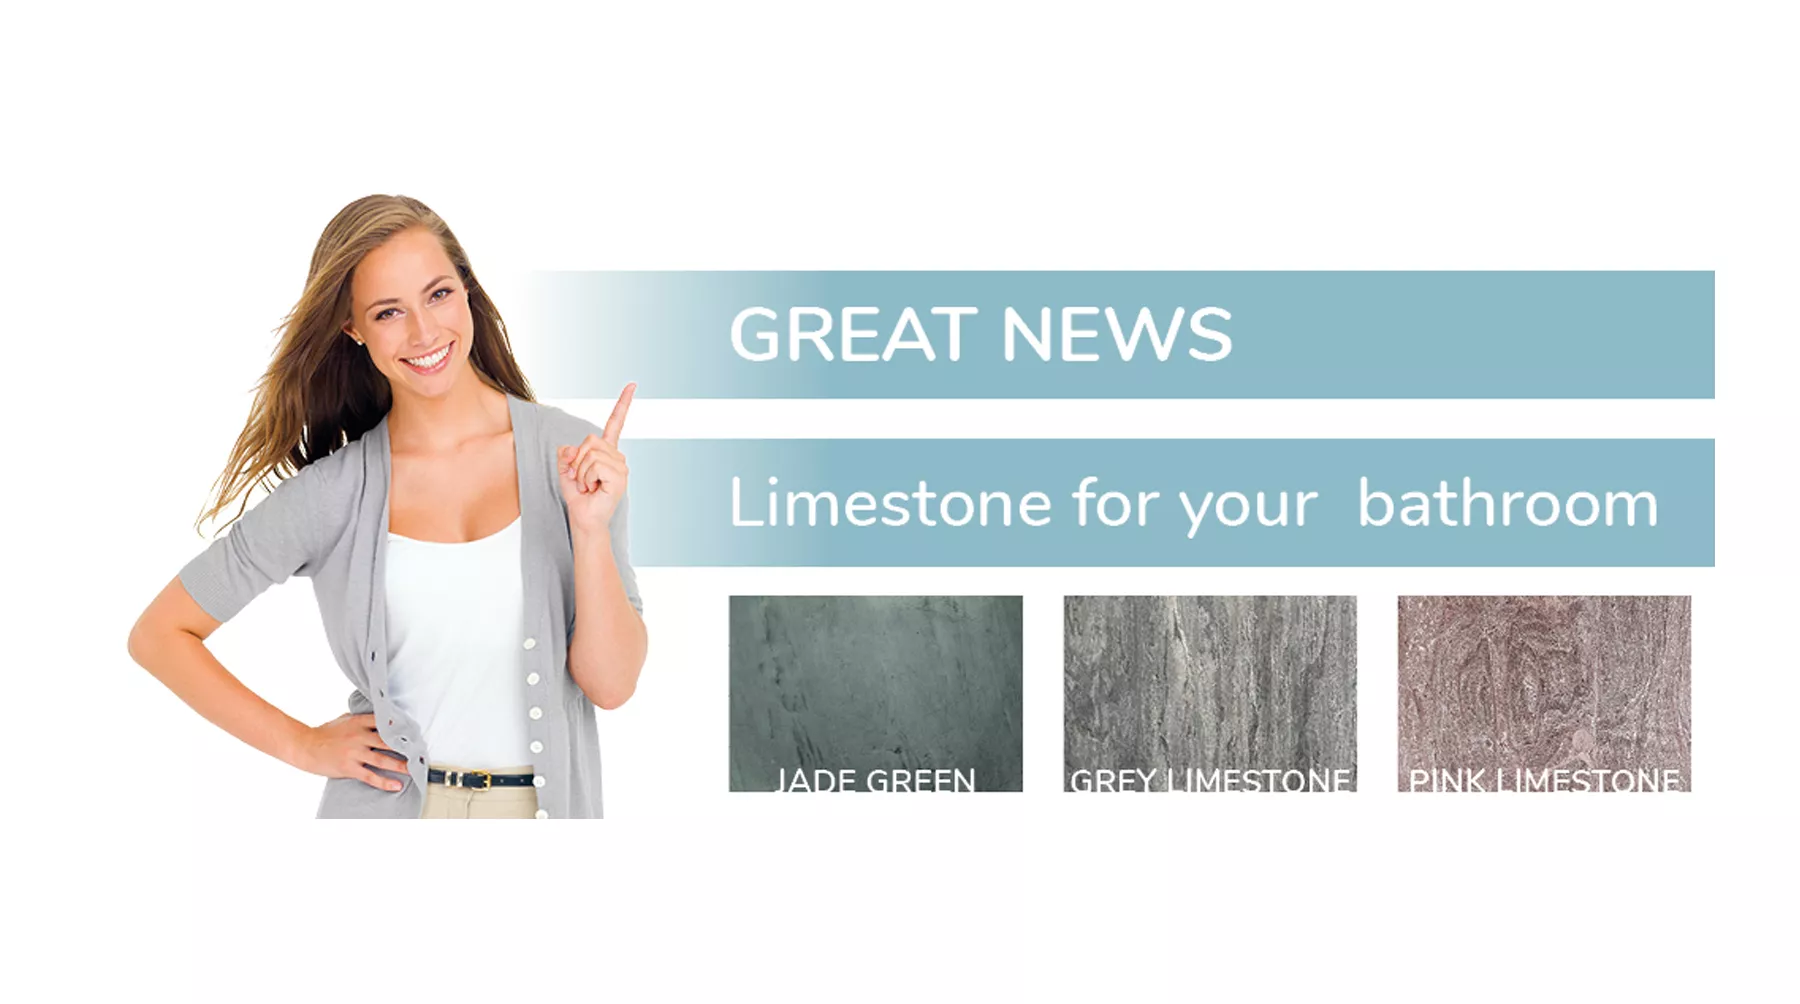 Great news: Limestone in your bathroom!